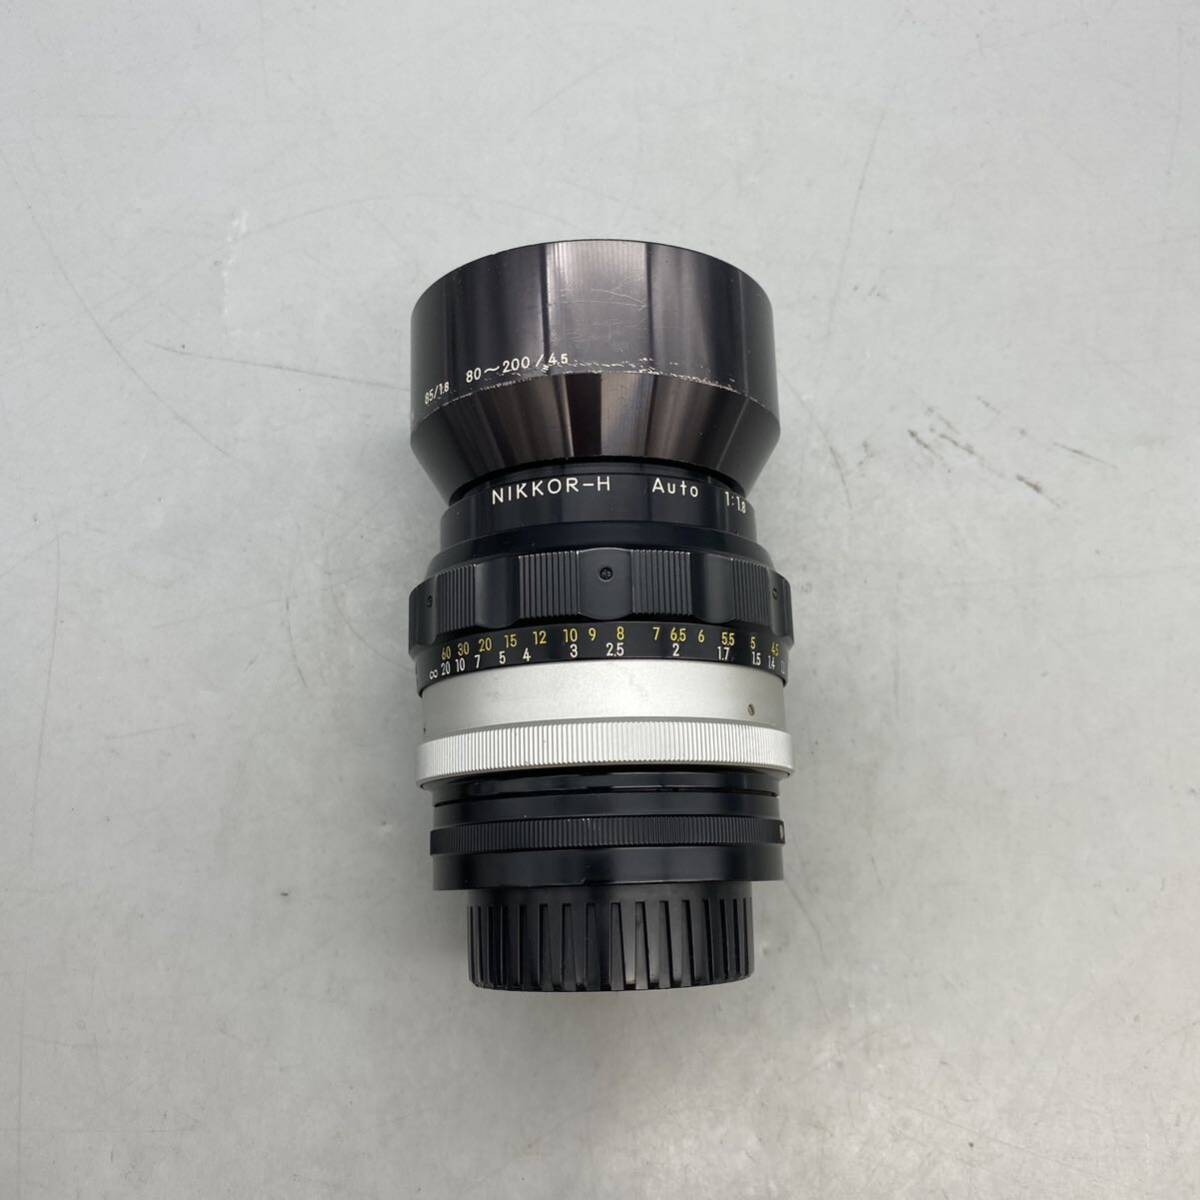 [C-24]Nikon Nikon summarize camera lens NIKKOR-H Auto 1:1.8 f=85mm lens hood HN-7 85/1.8 80~200/4.5 operation not yet verification 